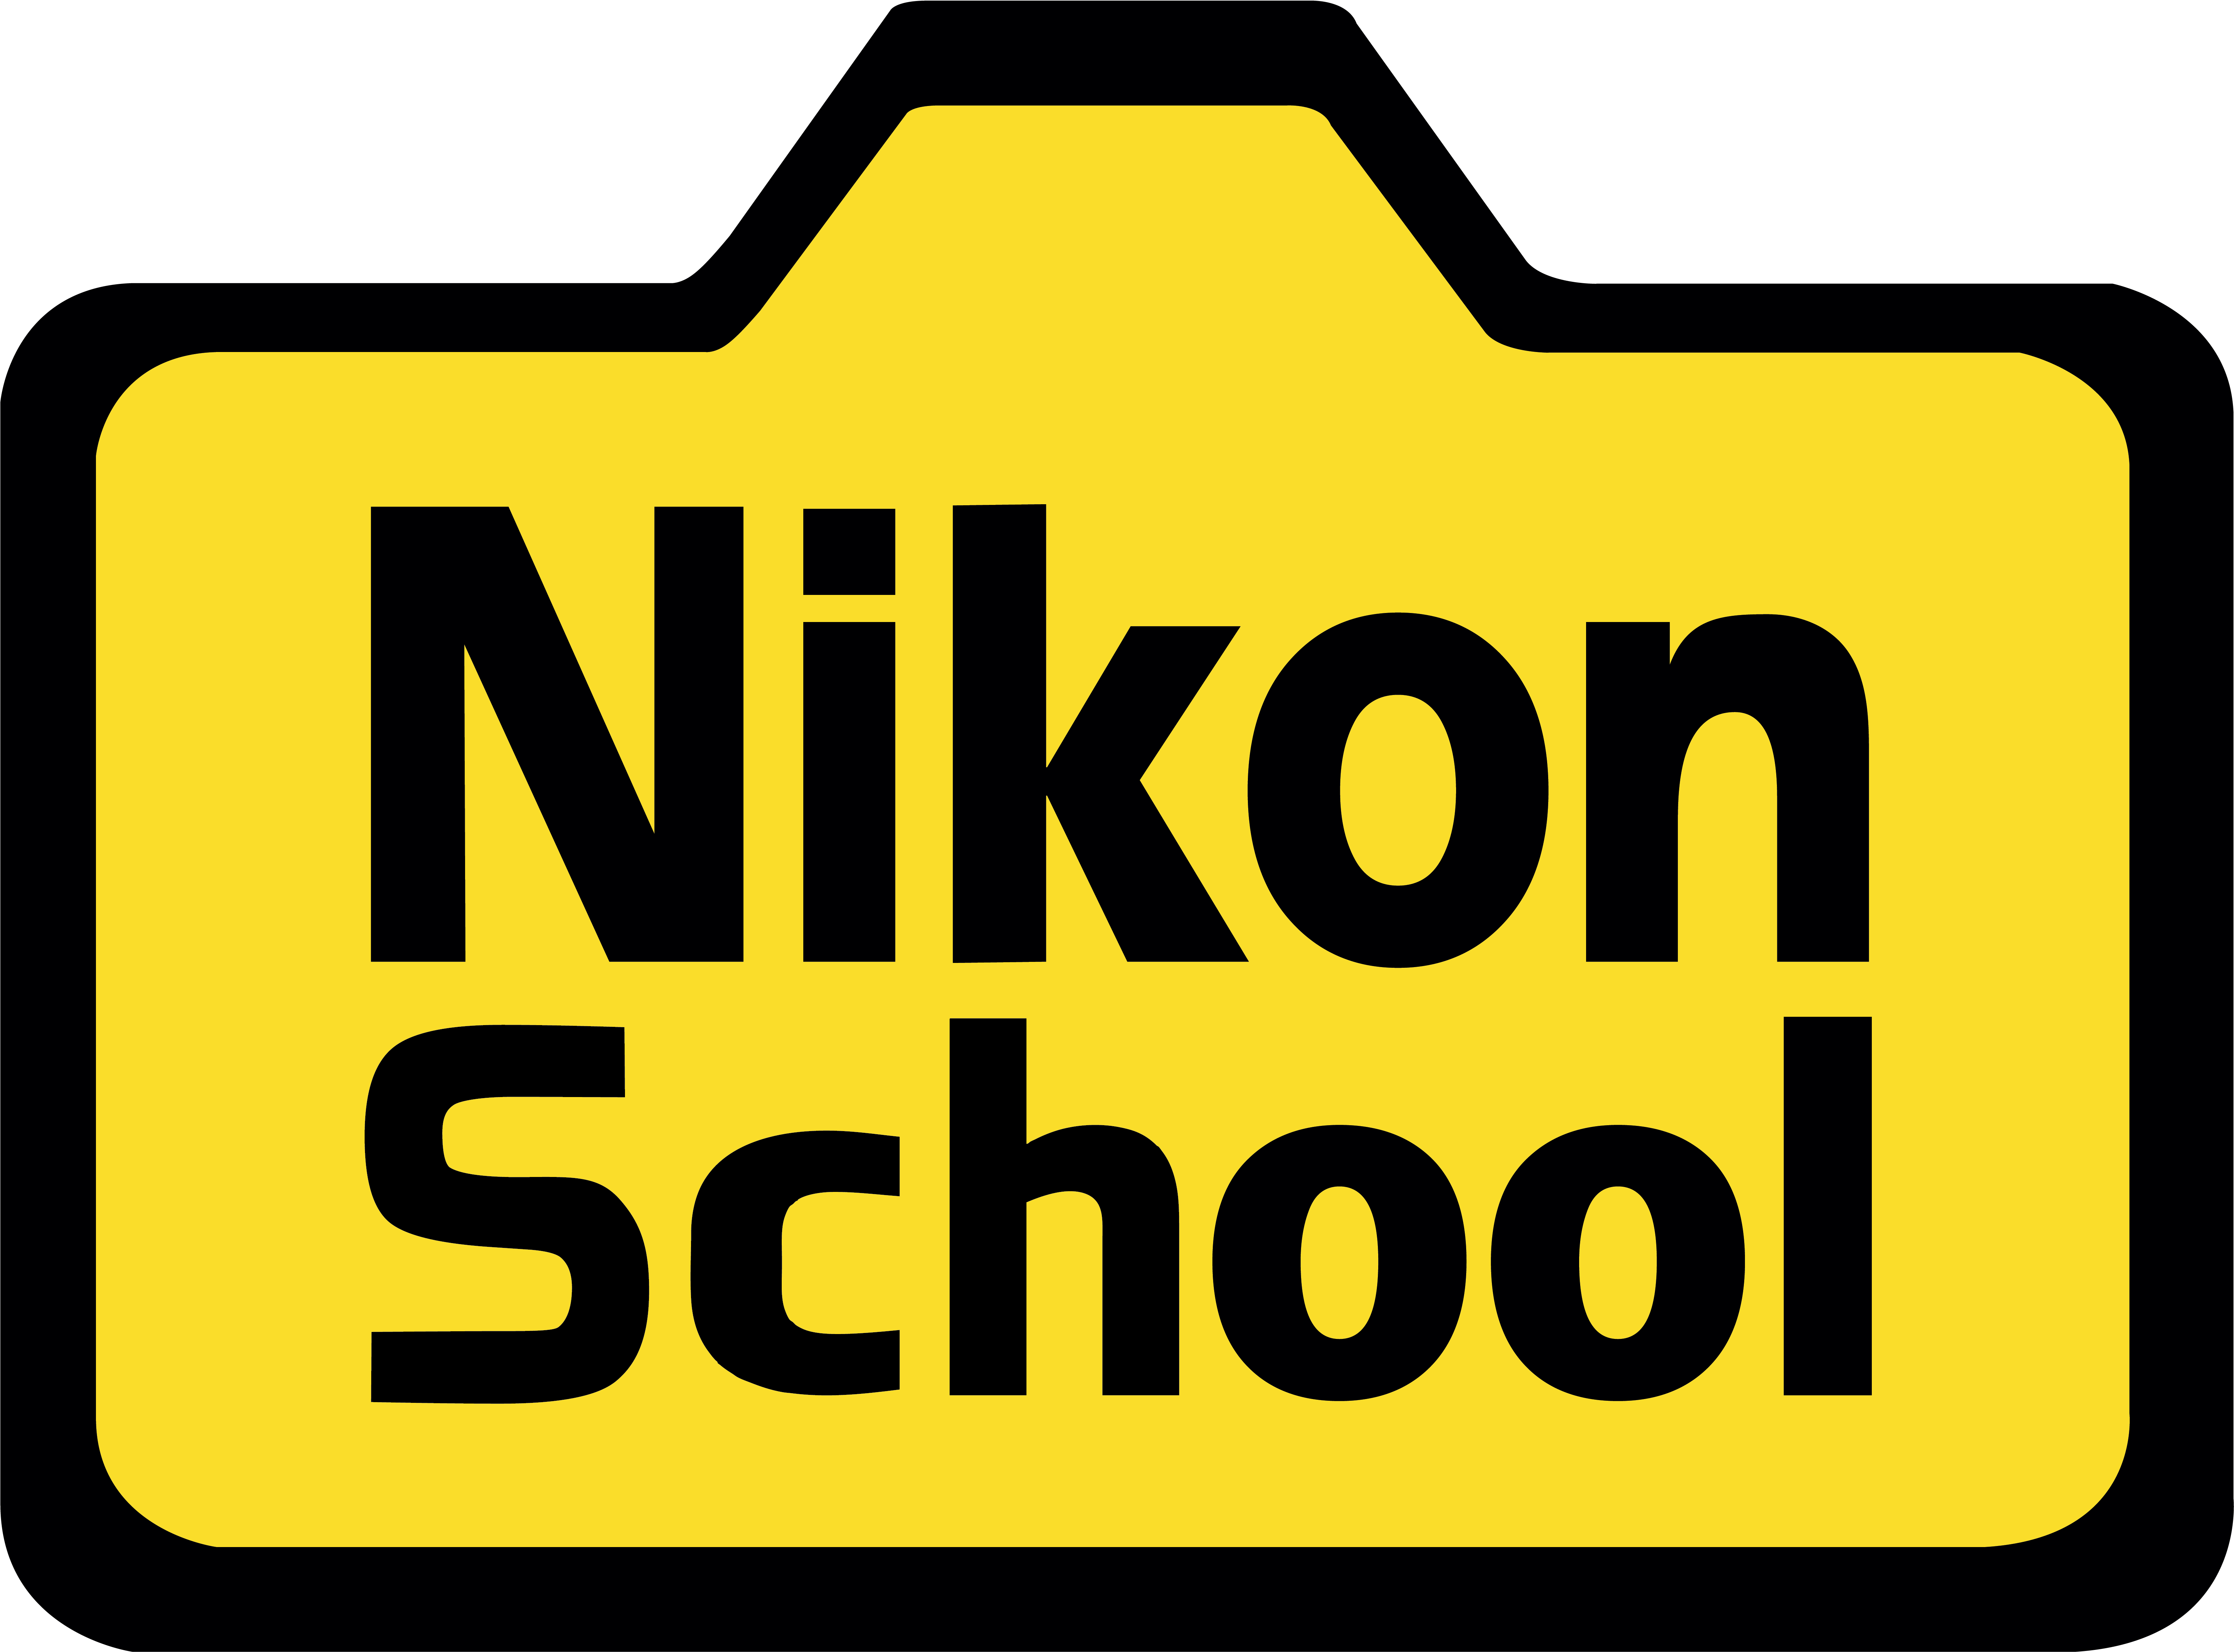 03 214 20218/19) (fax: 03 214 20229) - Nikon School Logo (6949x5399)